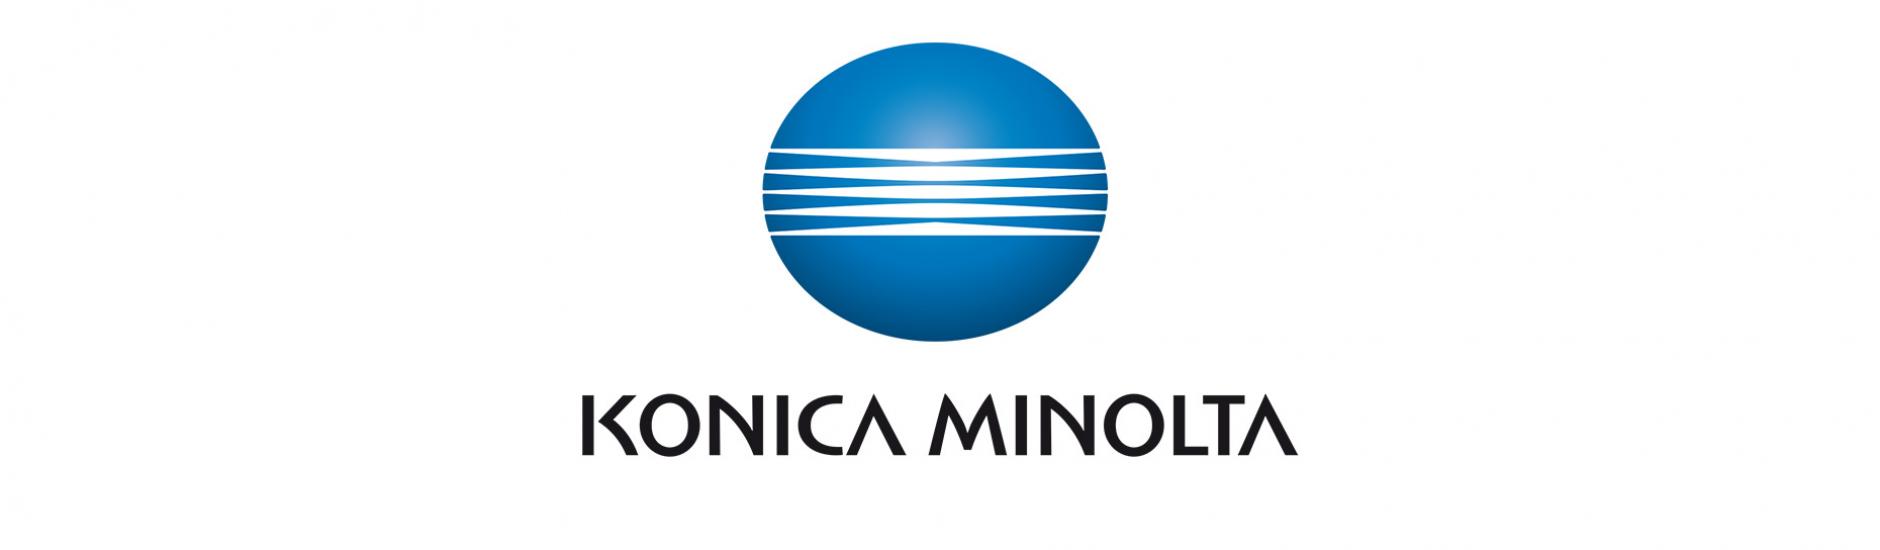 AccurioShine 101 - Konica Minolta's Multi-purpose Embellishment Solution -  YouTube